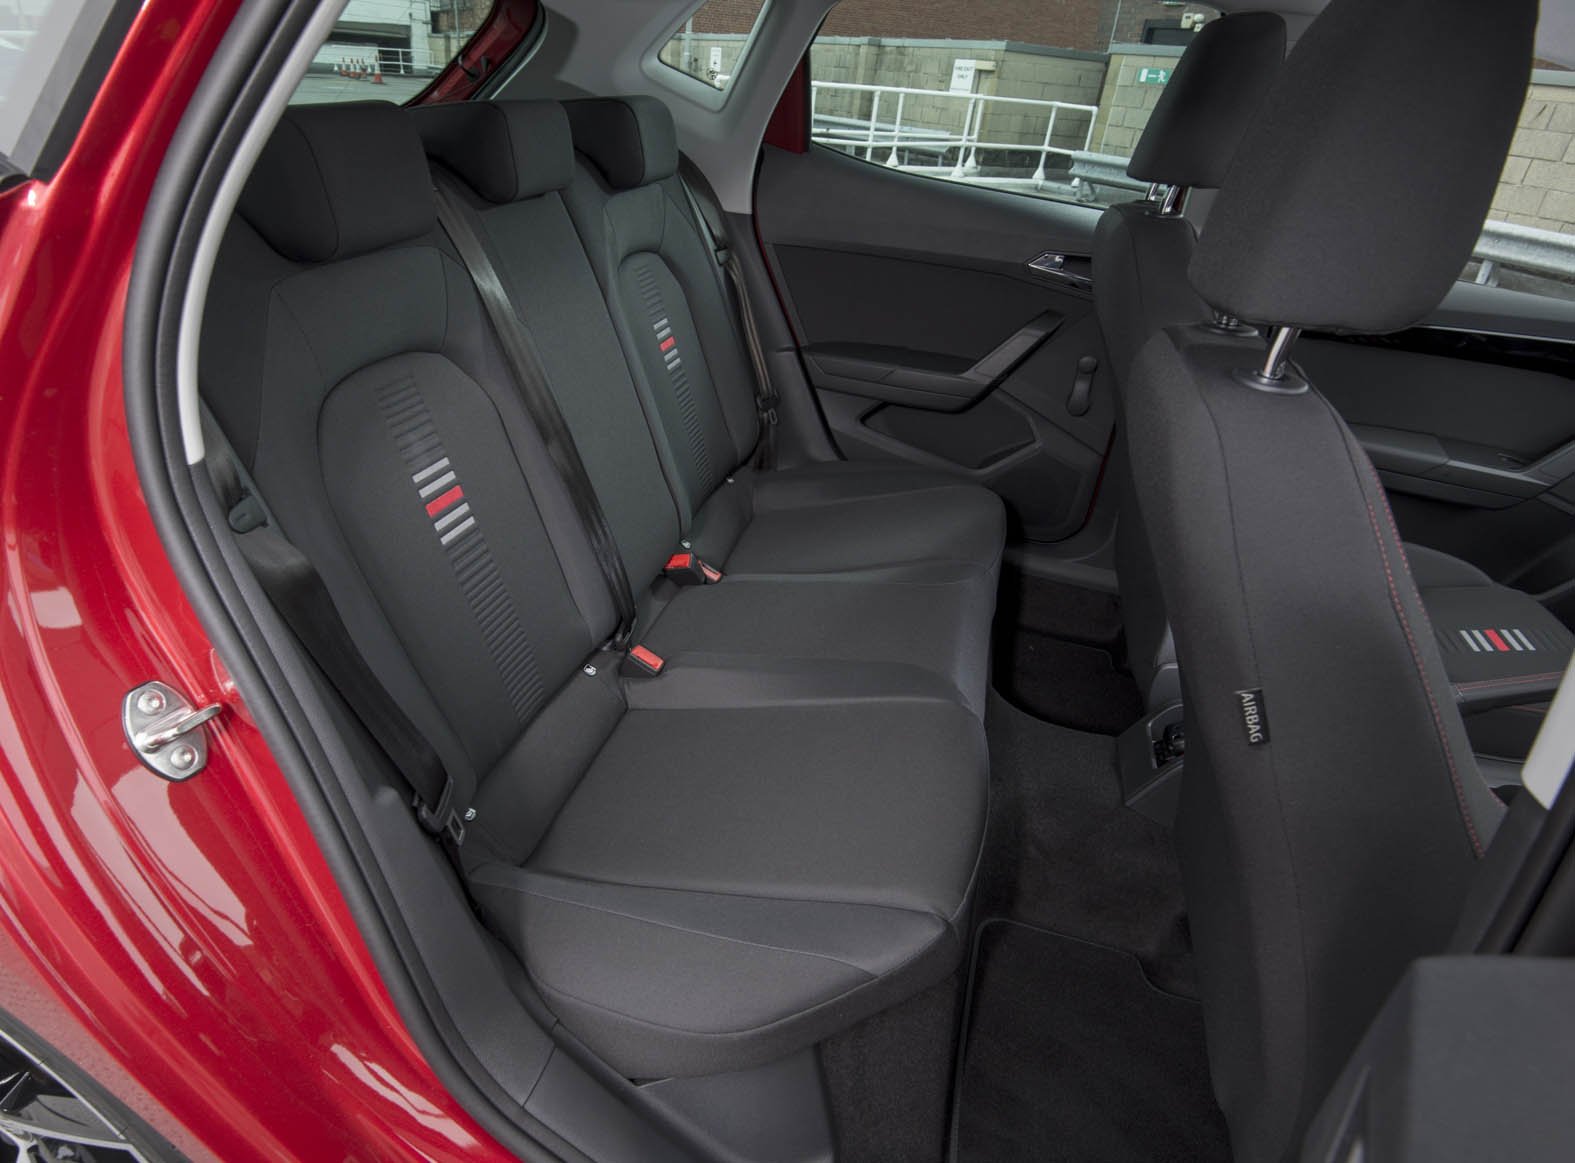 Seat Ibiza interior - Seats